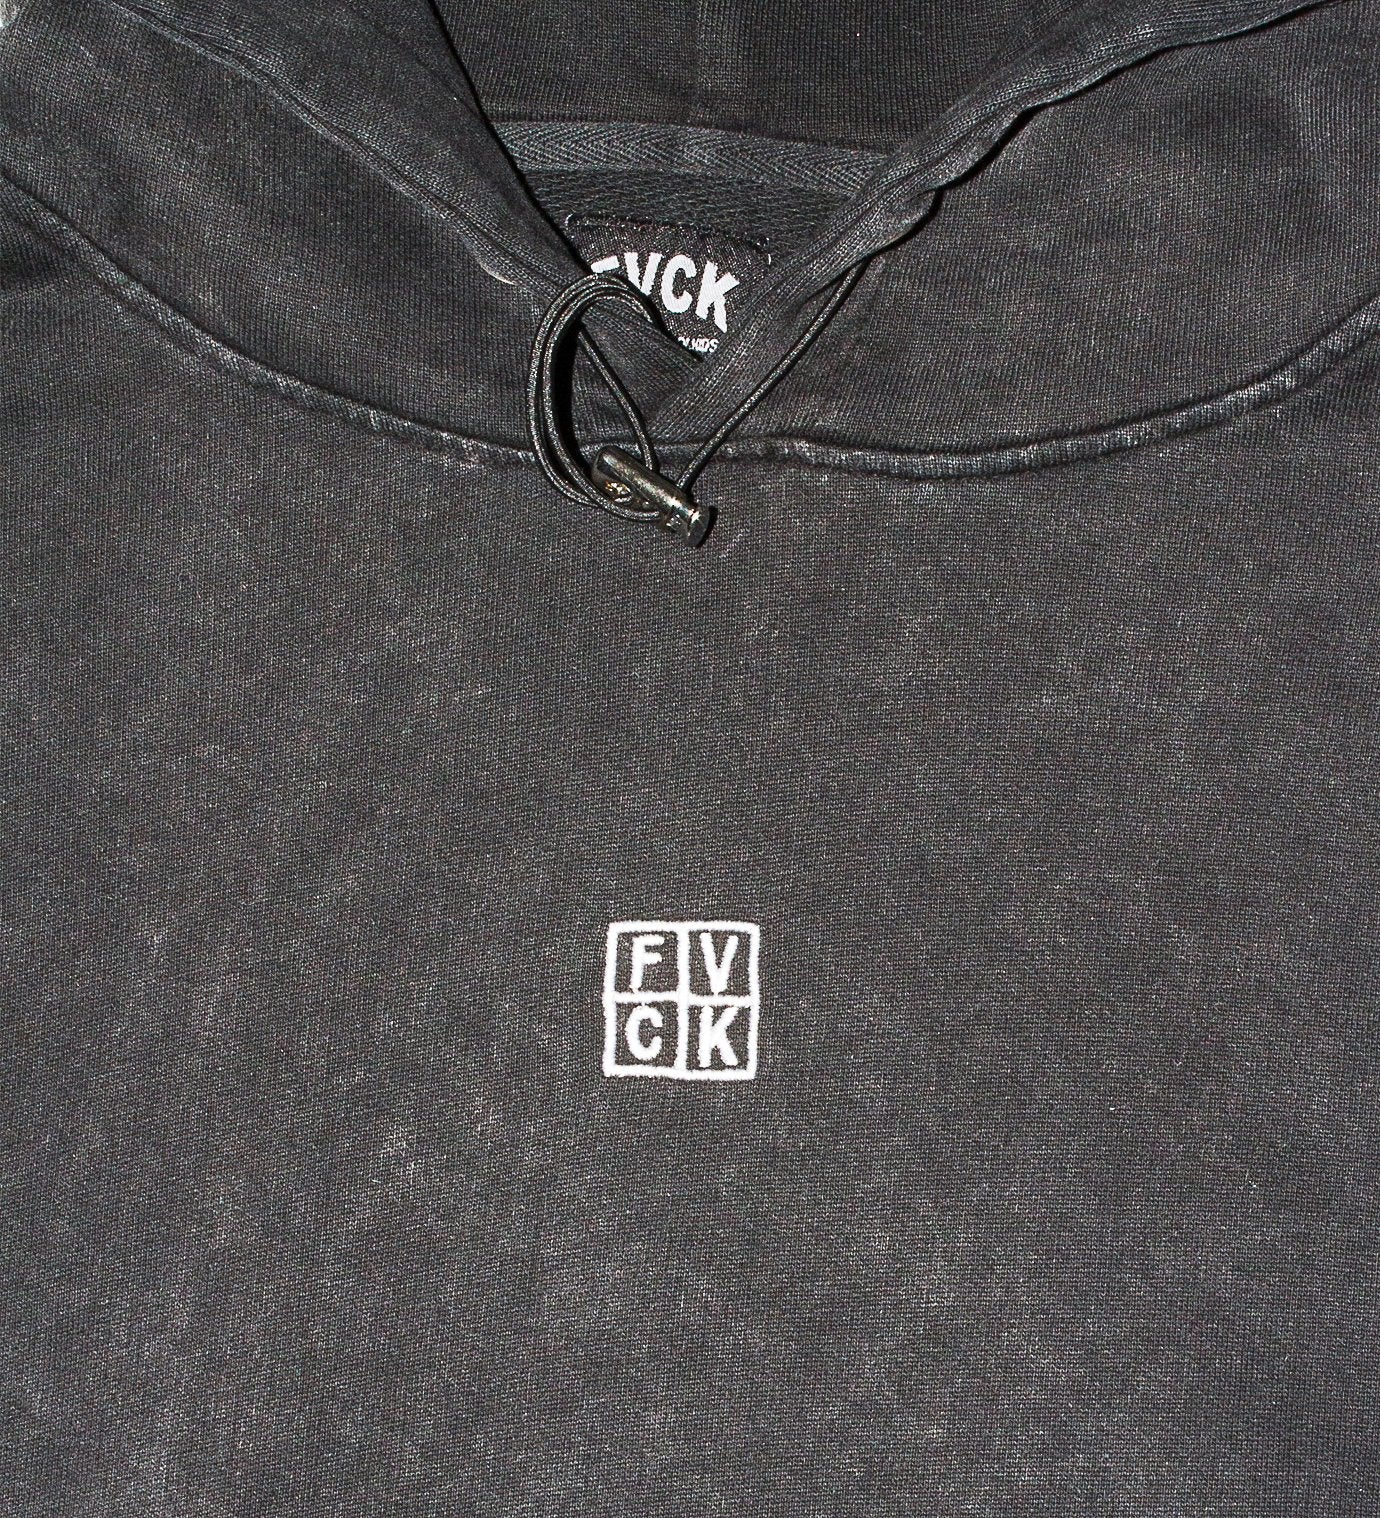 Hoodie noir - black - dye - streetwear - fvck - forverycoolkids - citadium - délavé - vintage - cool - hype